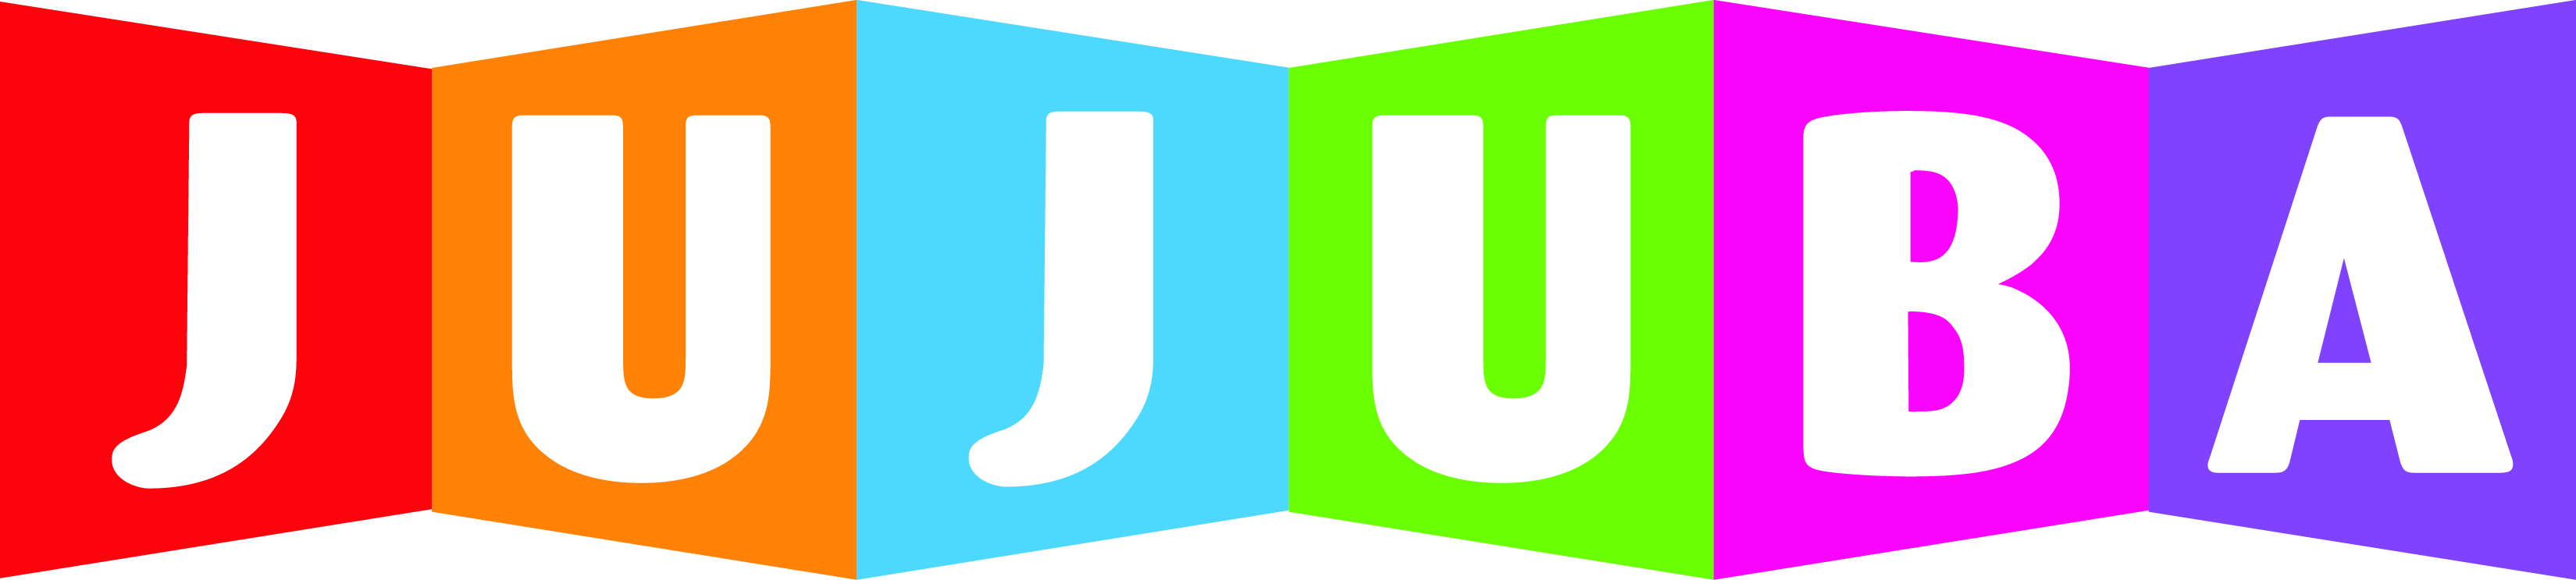 logo Jujuba Editora